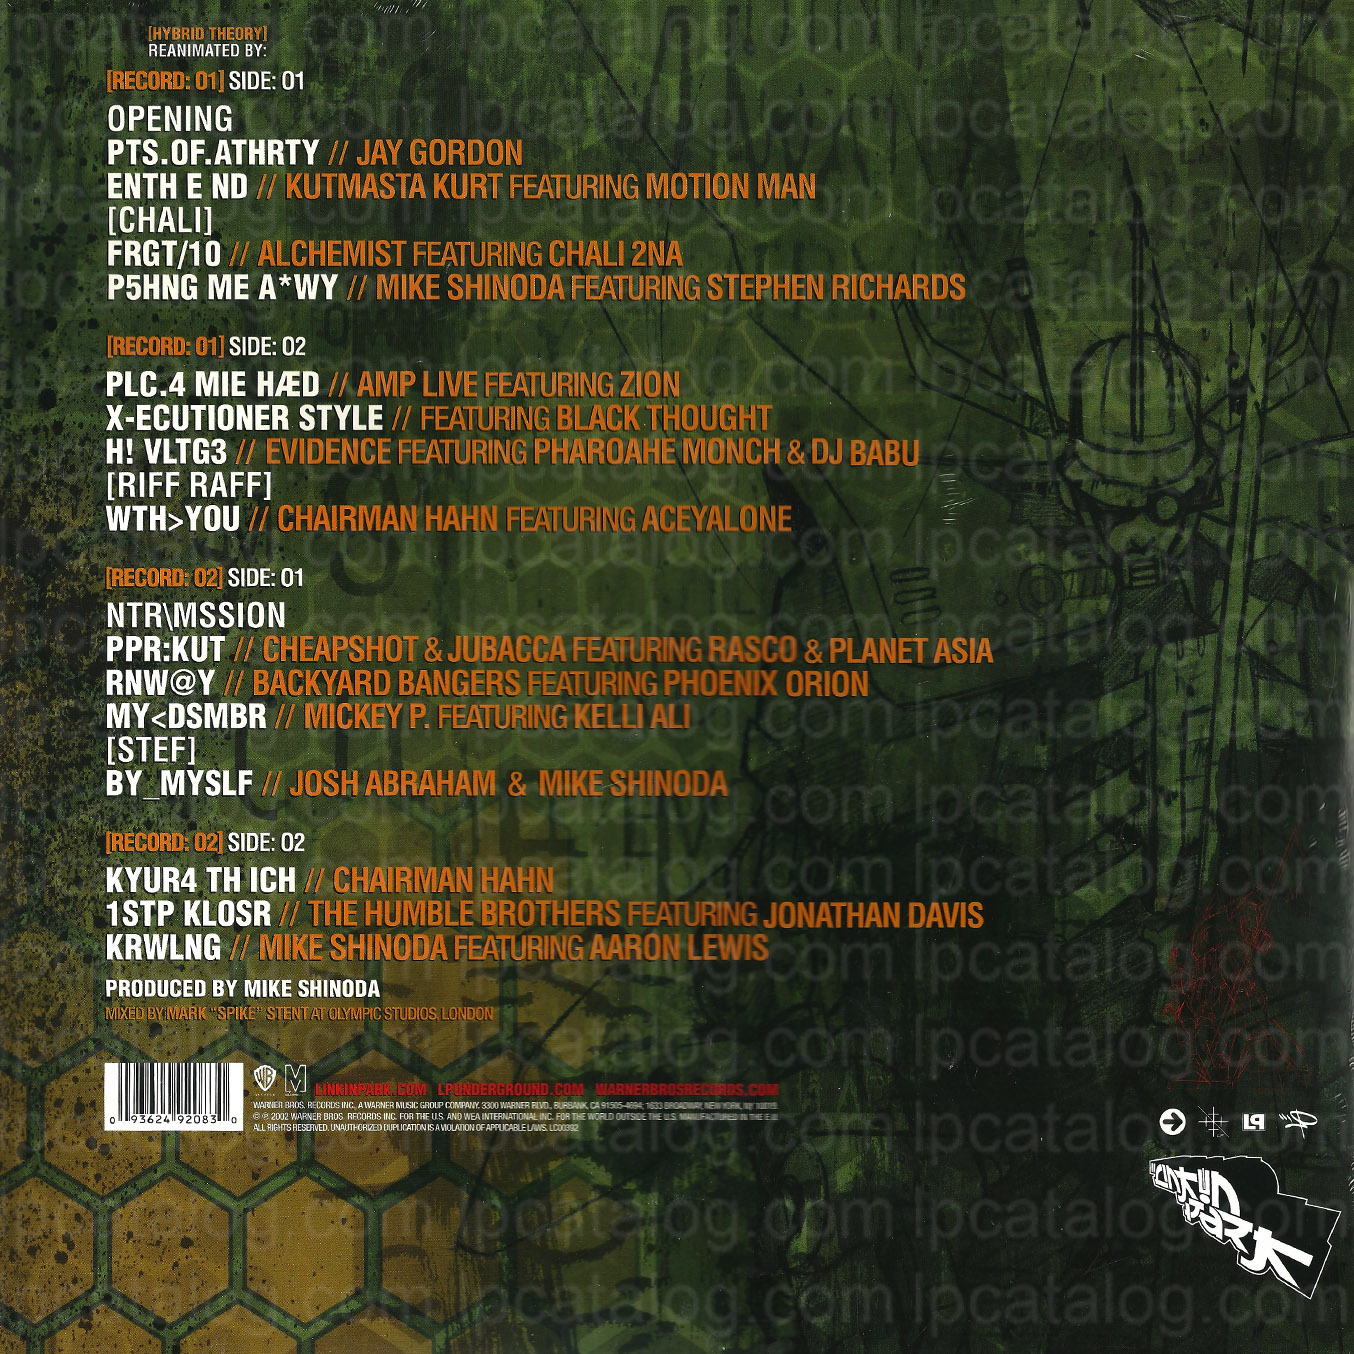  Linkin Park - Reanimation [LP] (Vinyl/LP): CDs & Vinyl